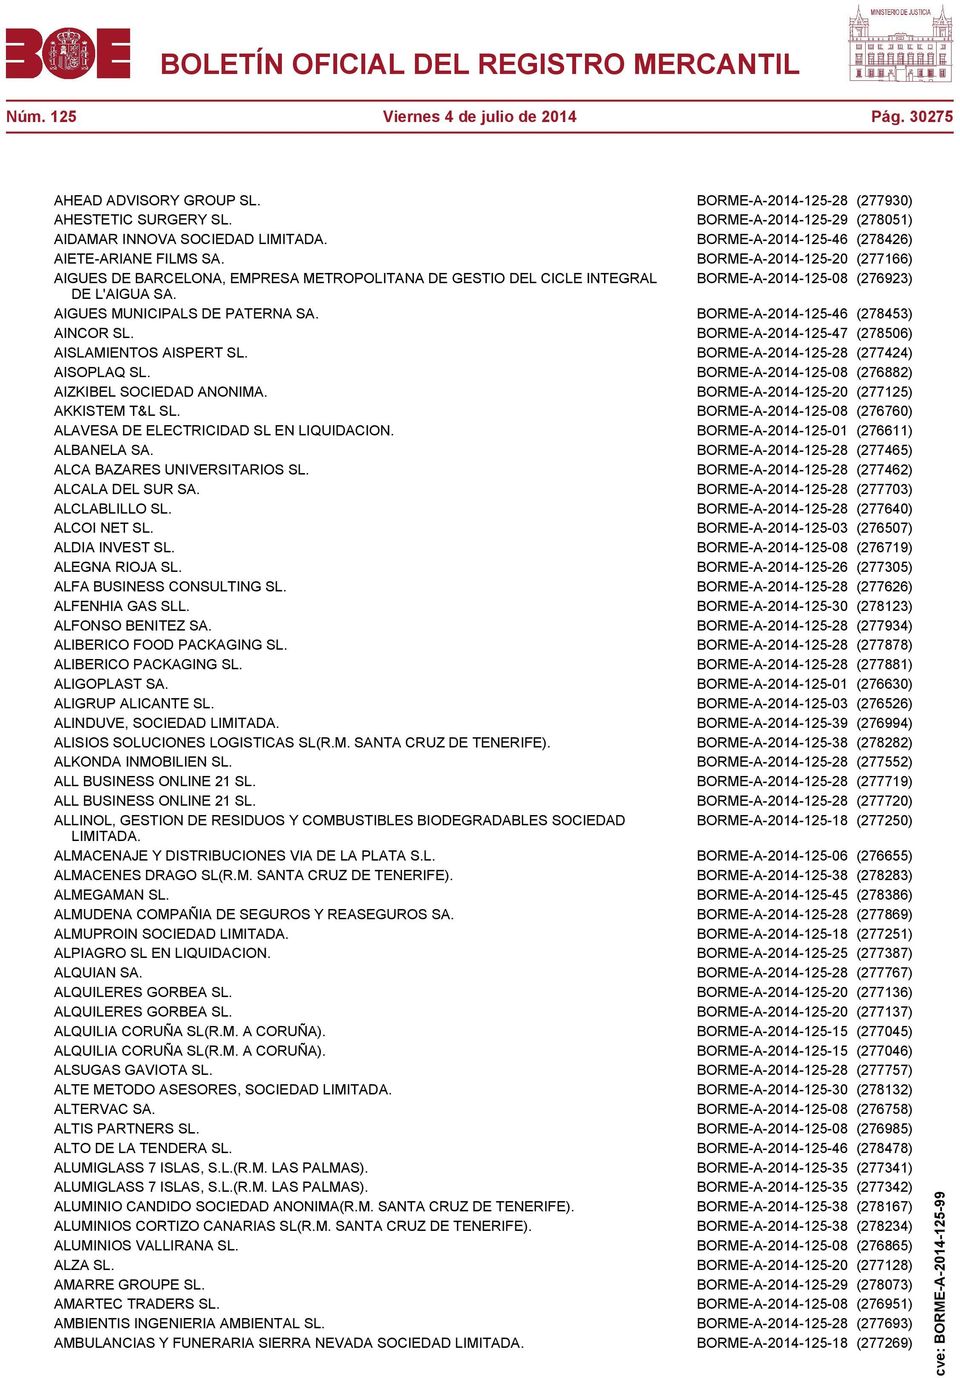 AIGUES MUNICIPALS DE PATERNA SA. BORME-A-2014-125-46 (278453) AINCOR SL. BORME-A-2014-125-47 (278506) AISLAMIENTOS AISPERT SL. BORME-A-2014-125-28 (277424) AISOPLAQ SL.